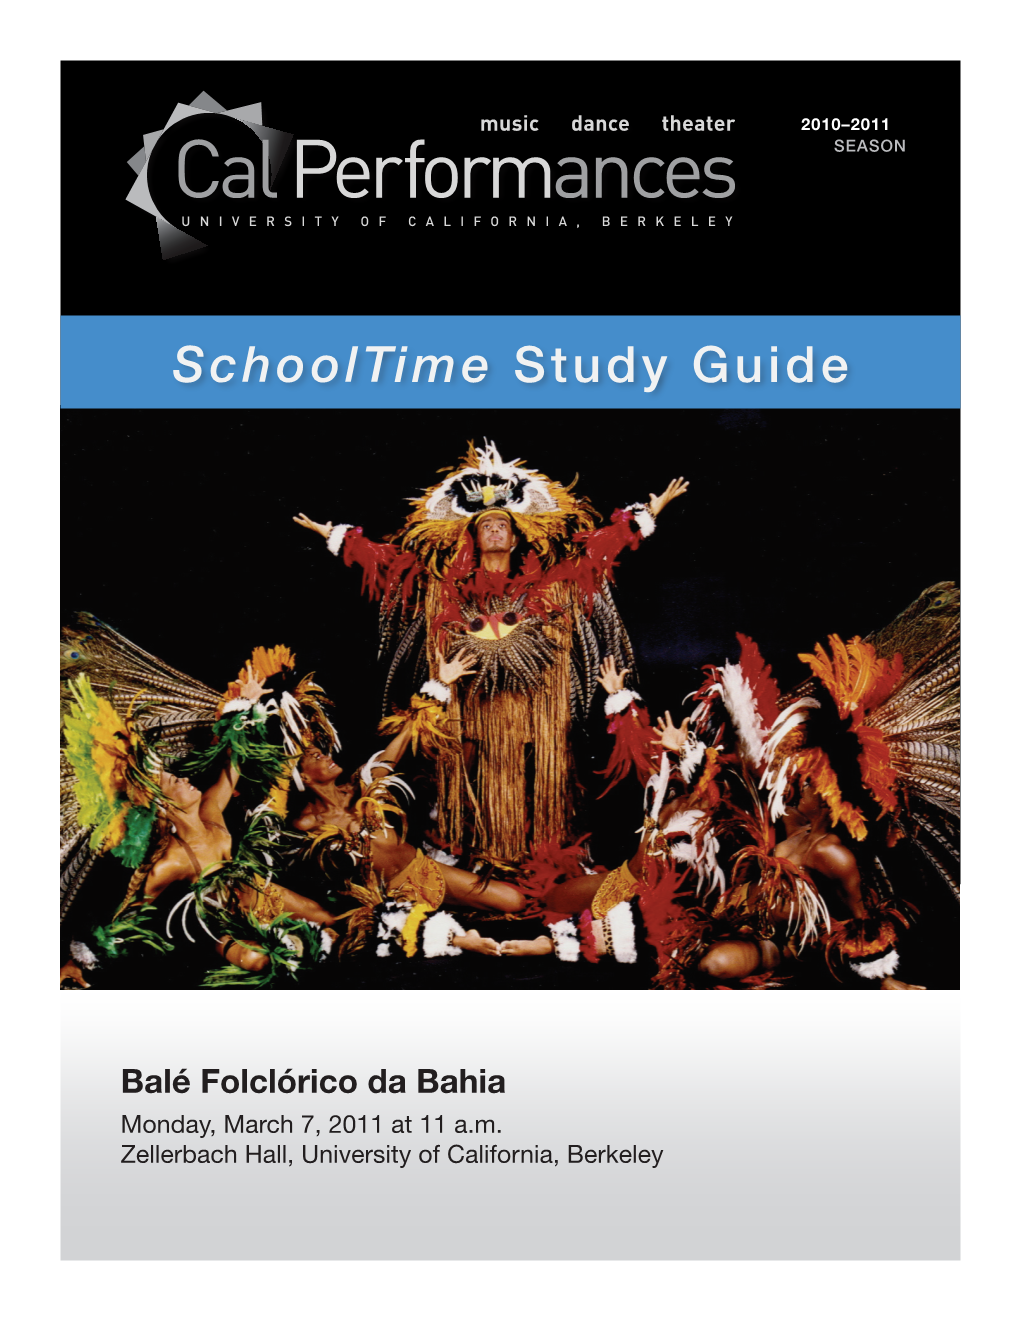 About Balé Folclórico Da Bahia